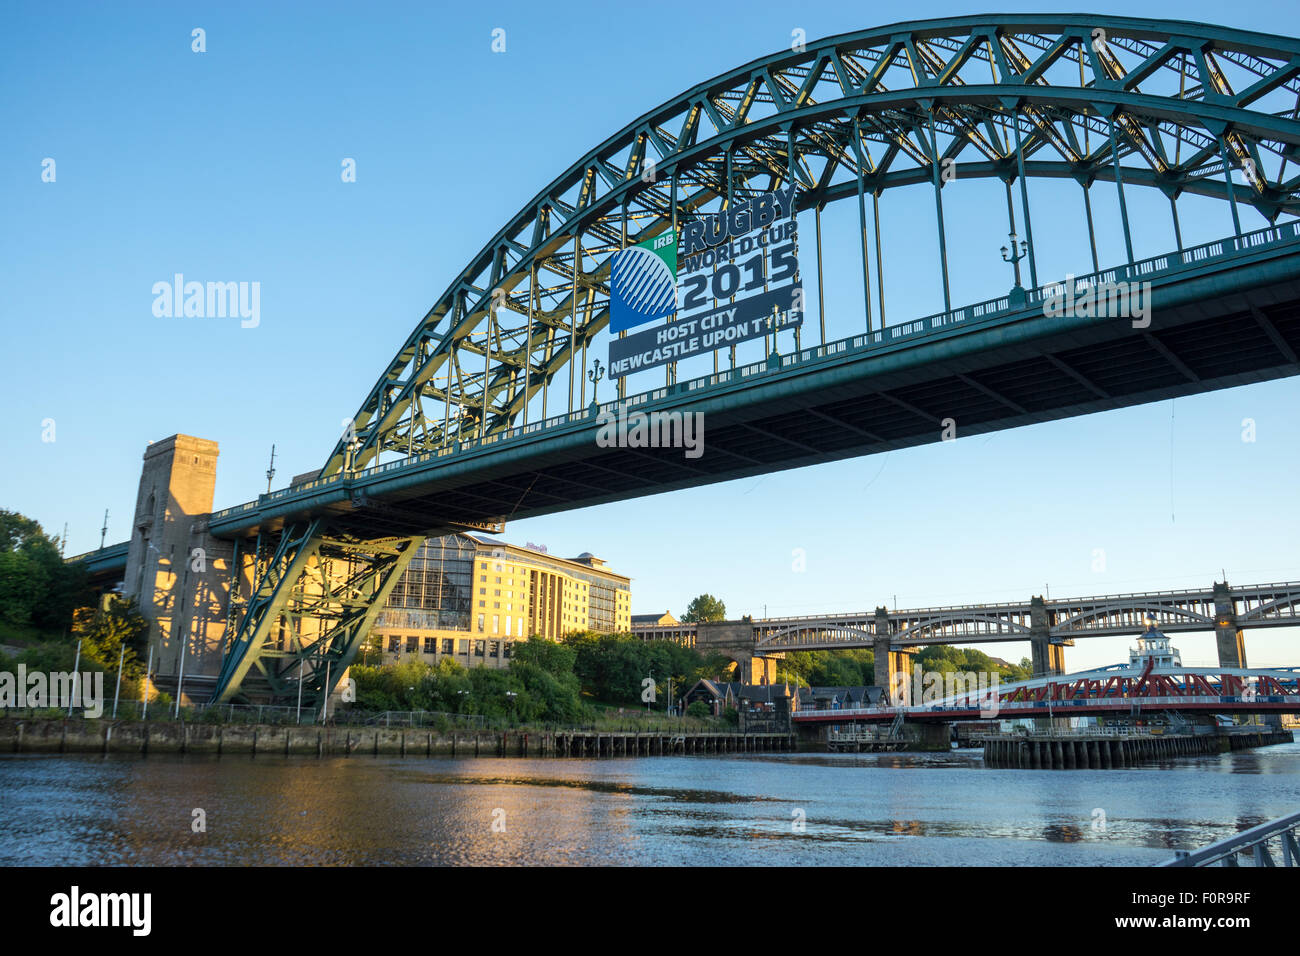 Tyne Bridge, Newcastle Upon Tyne, mit Rugby World Cup 2015 Host City Anzeige auf. Stockfoto